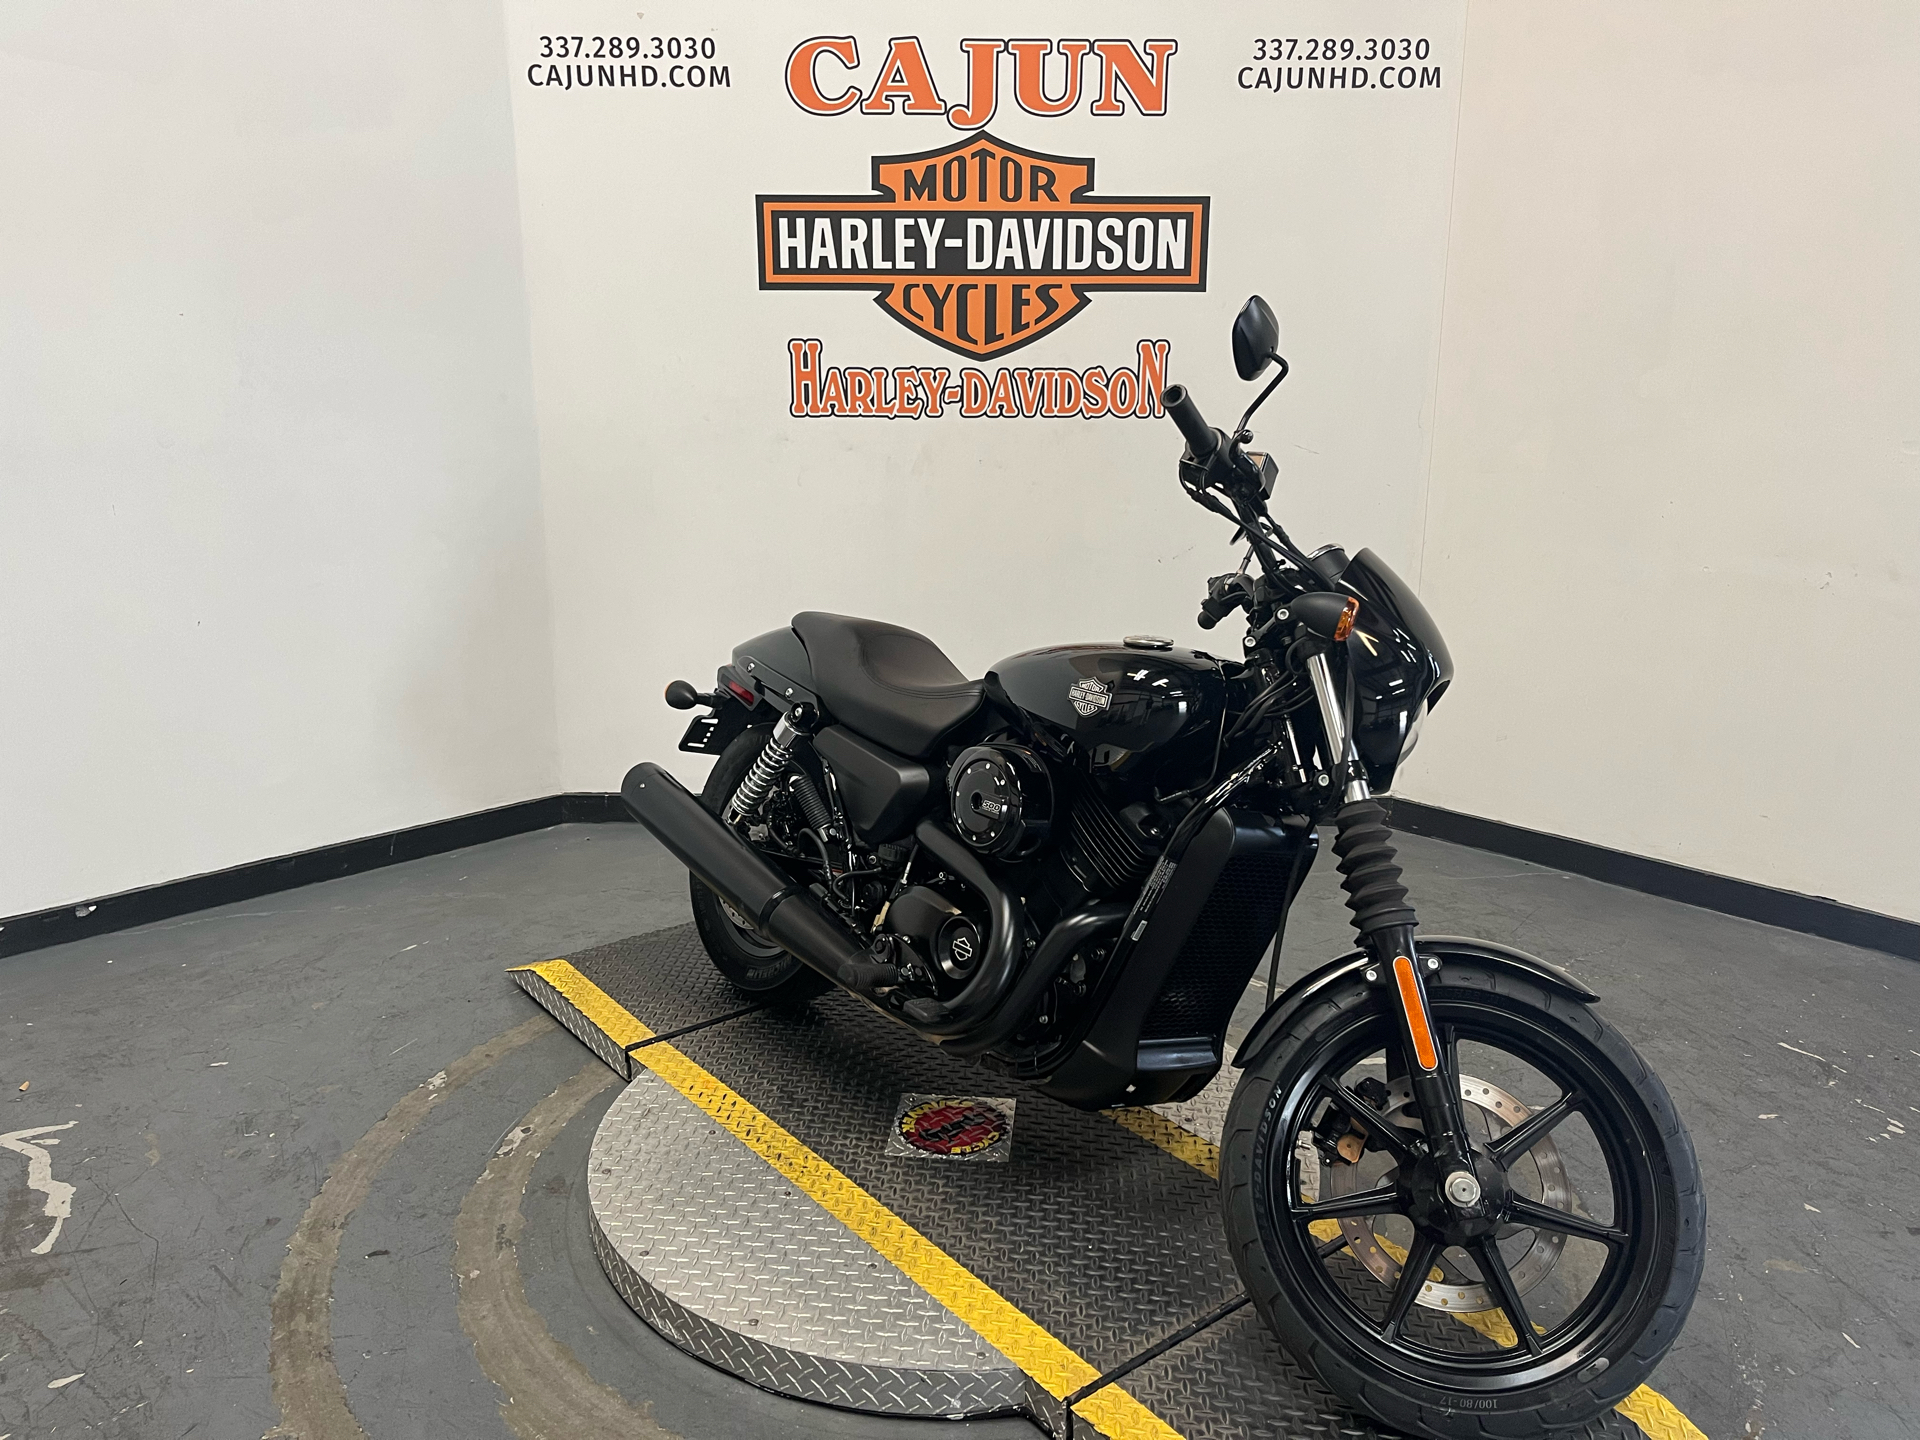 2020 Harley-Davidson Street® 500 in Scott, Louisiana - Photo 4